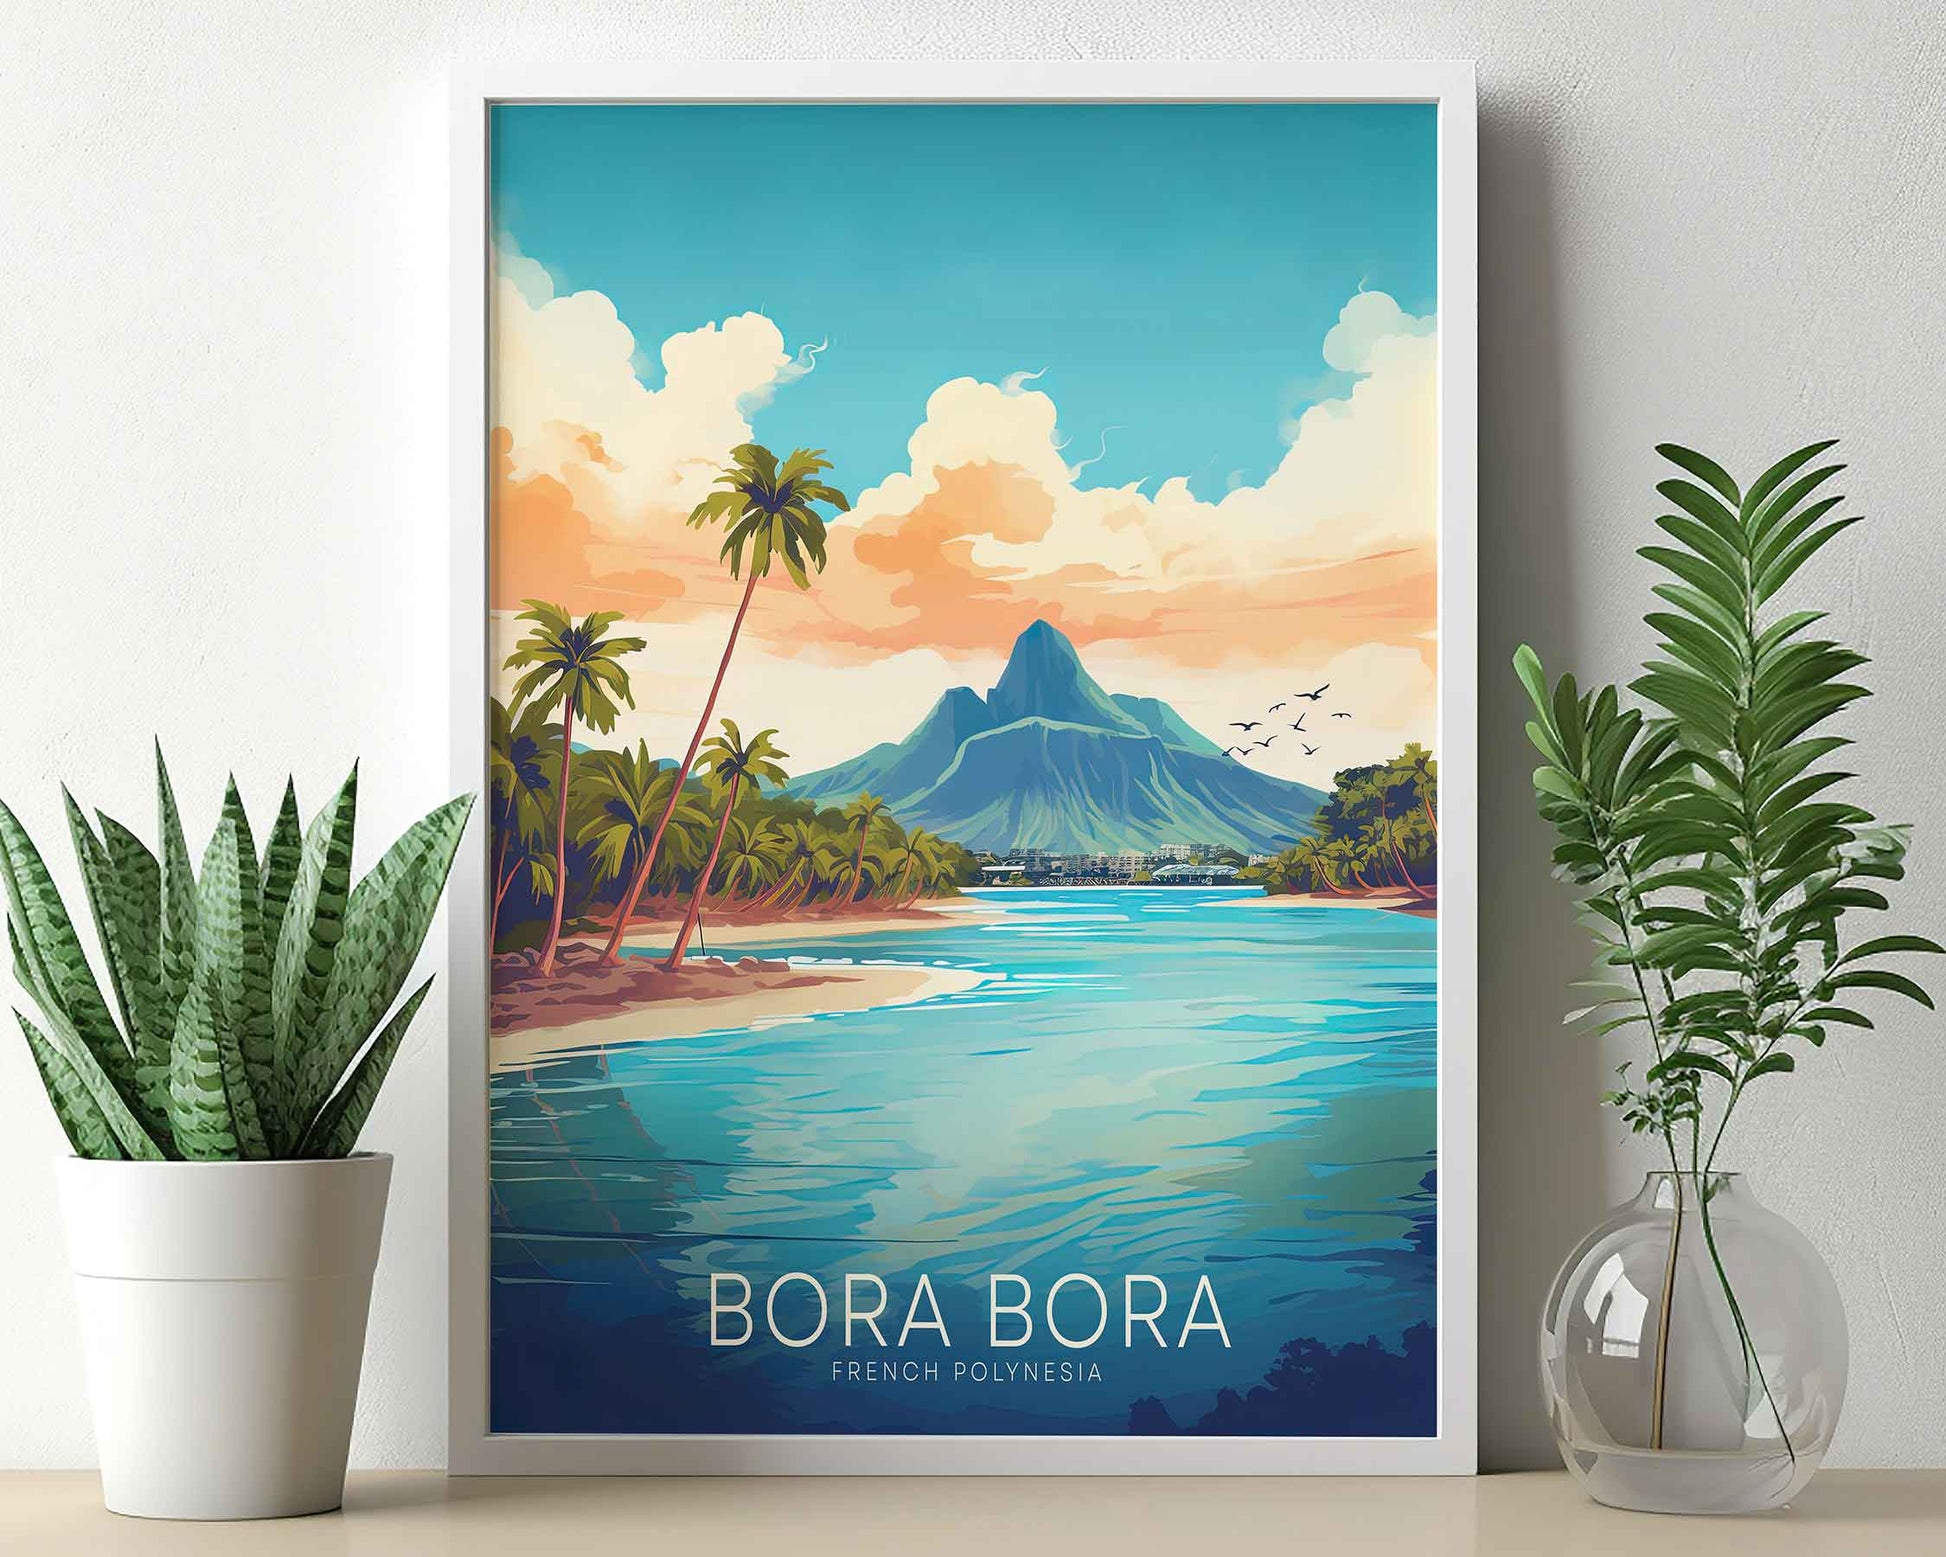 Framed Image of Bora Bora Wall Art Print Travel Posters Illustration